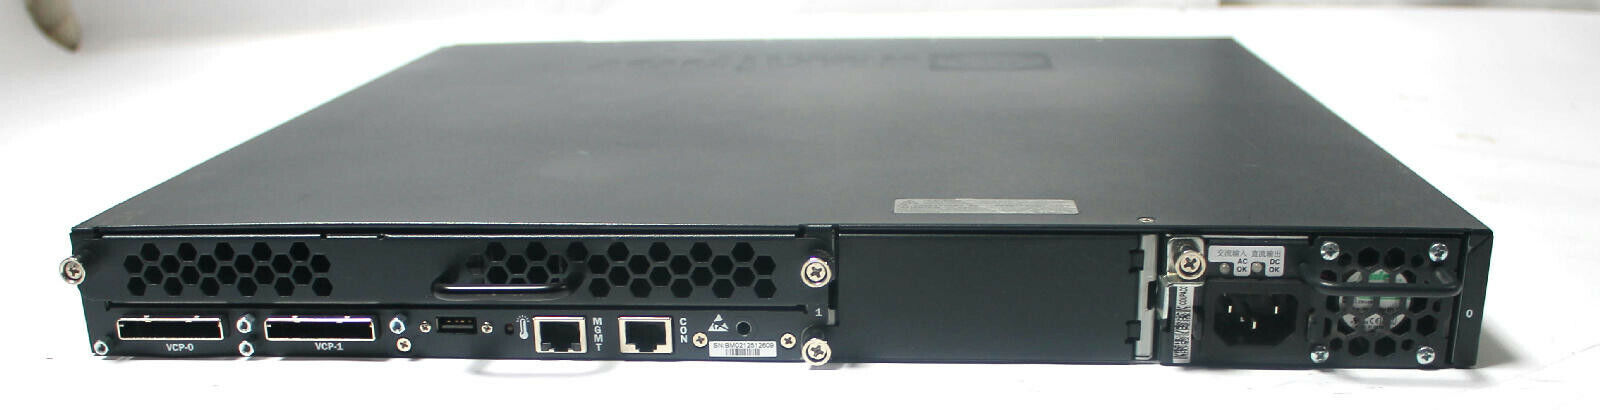 Juniper Networks EX4200-24T 24-port 10/100/1000BASE-T Switch 8 POE ports